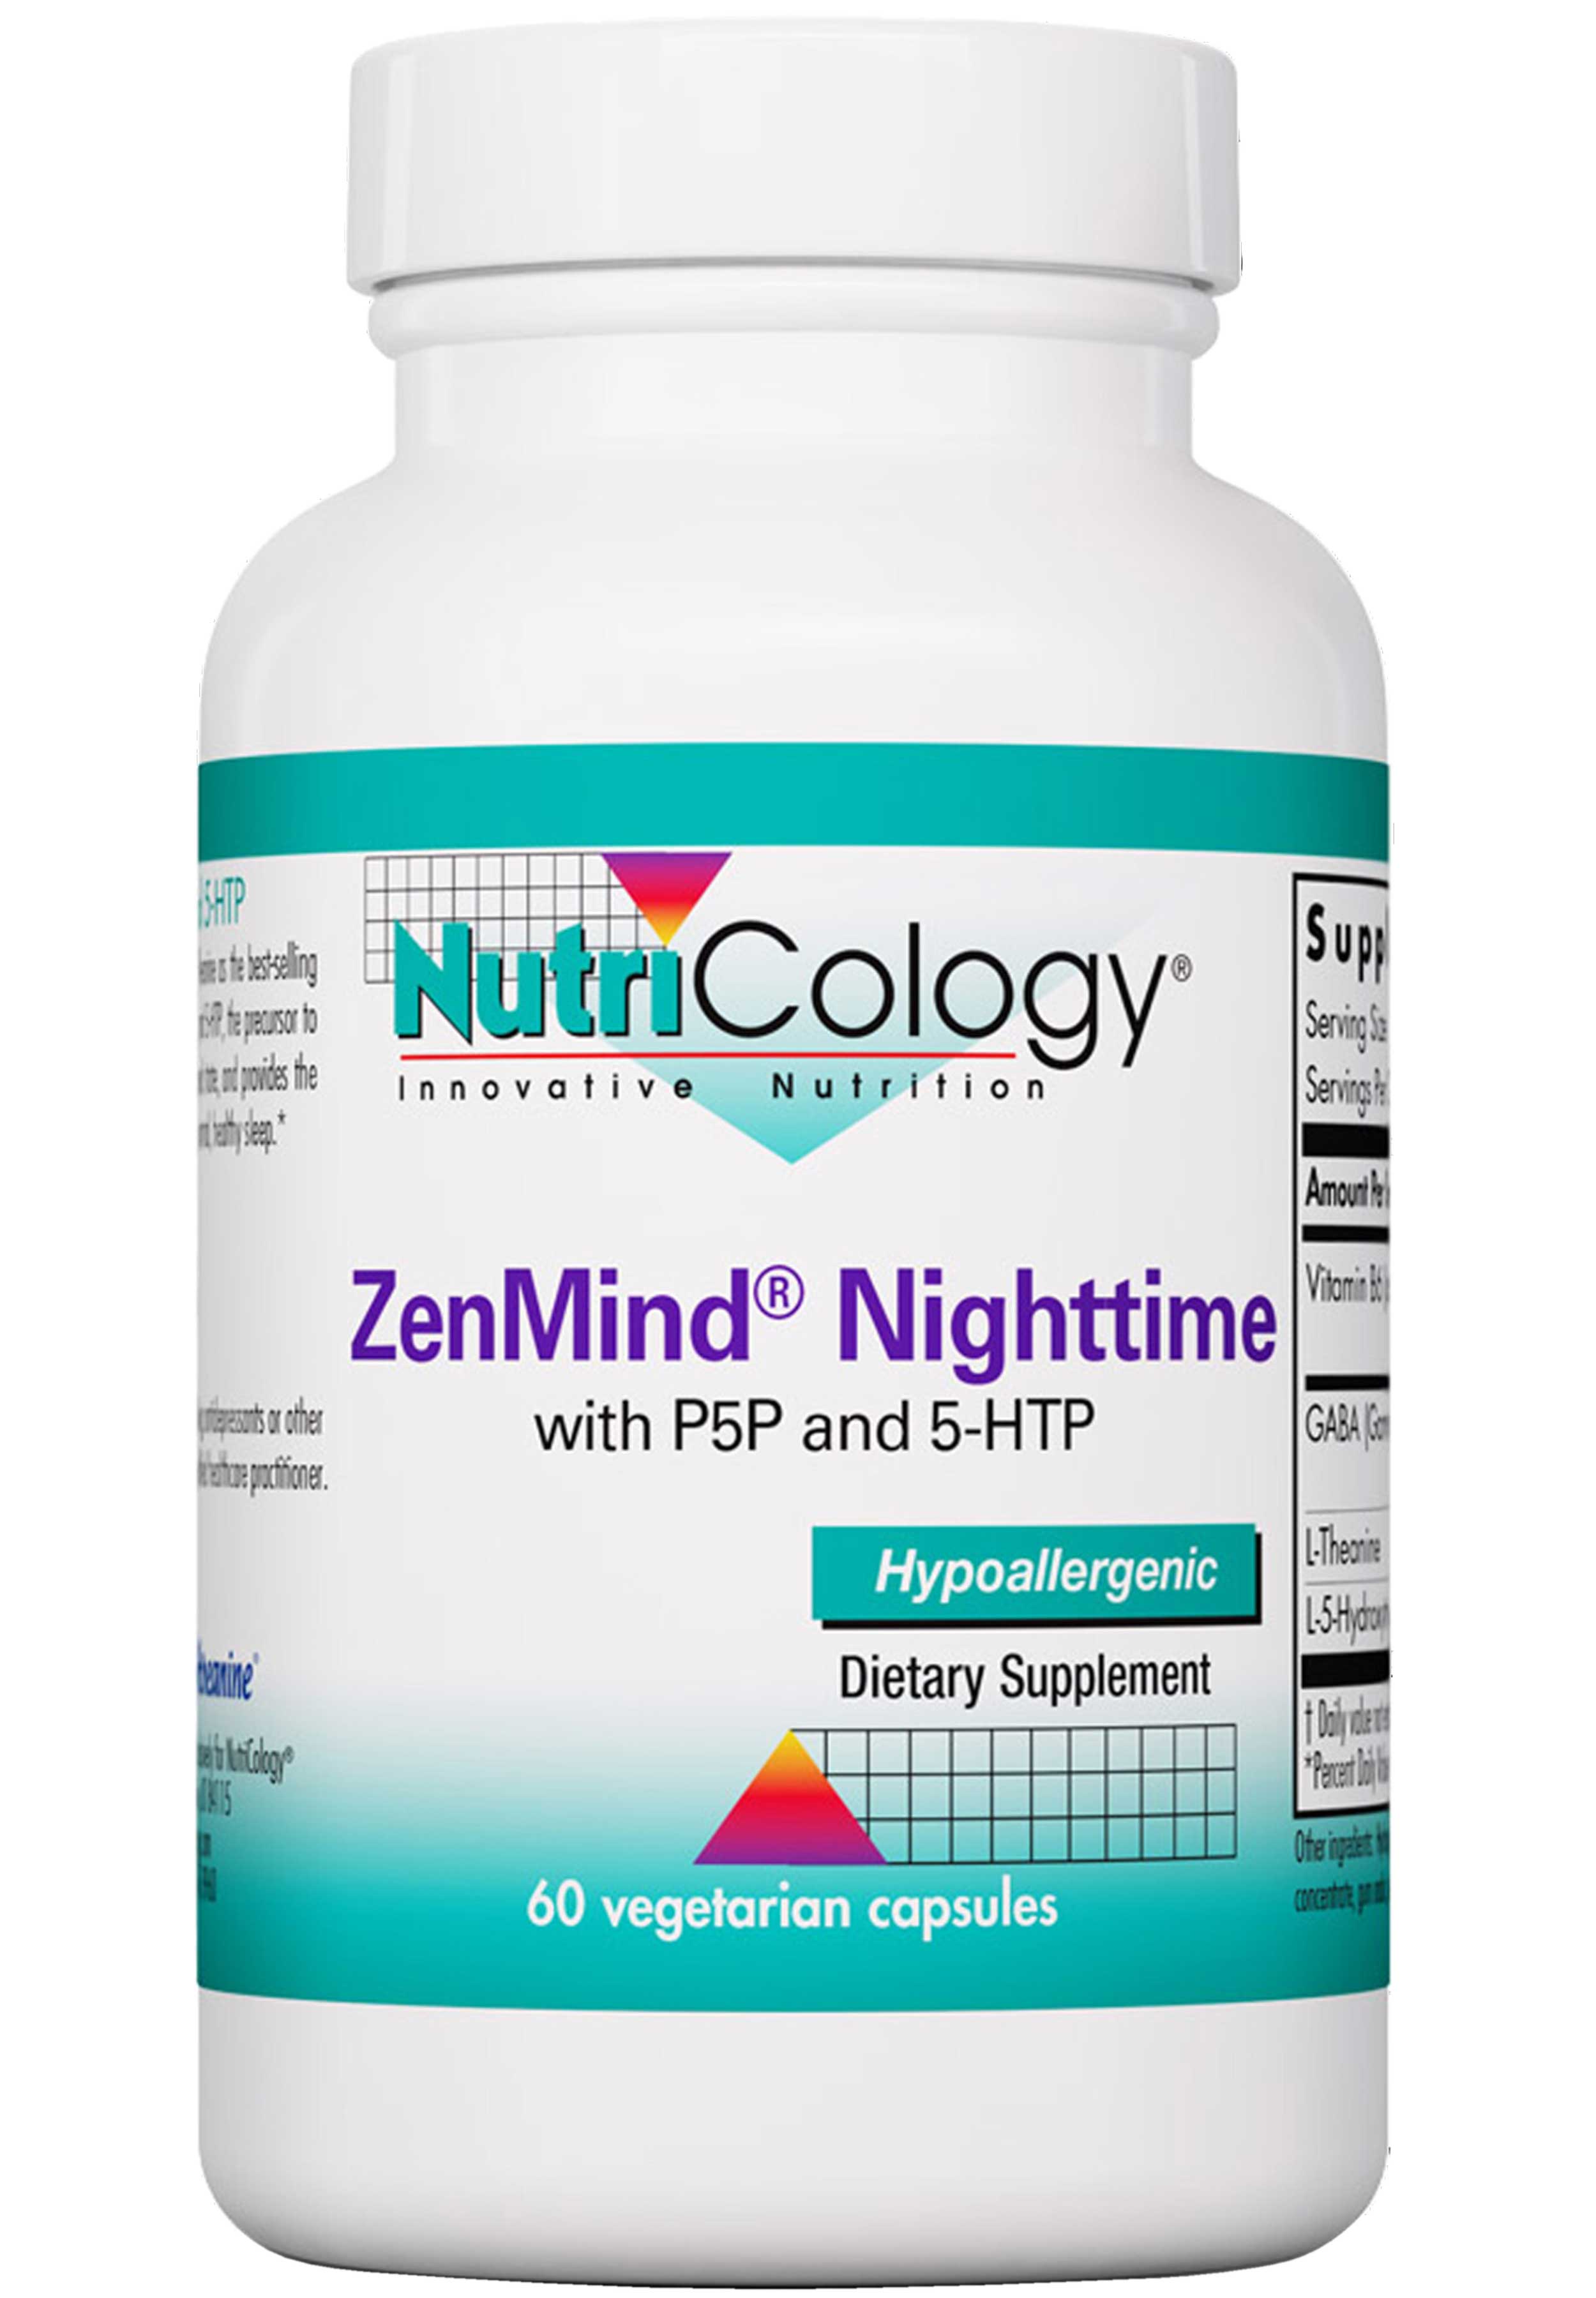 Nutricology ZenMind® Nighttime